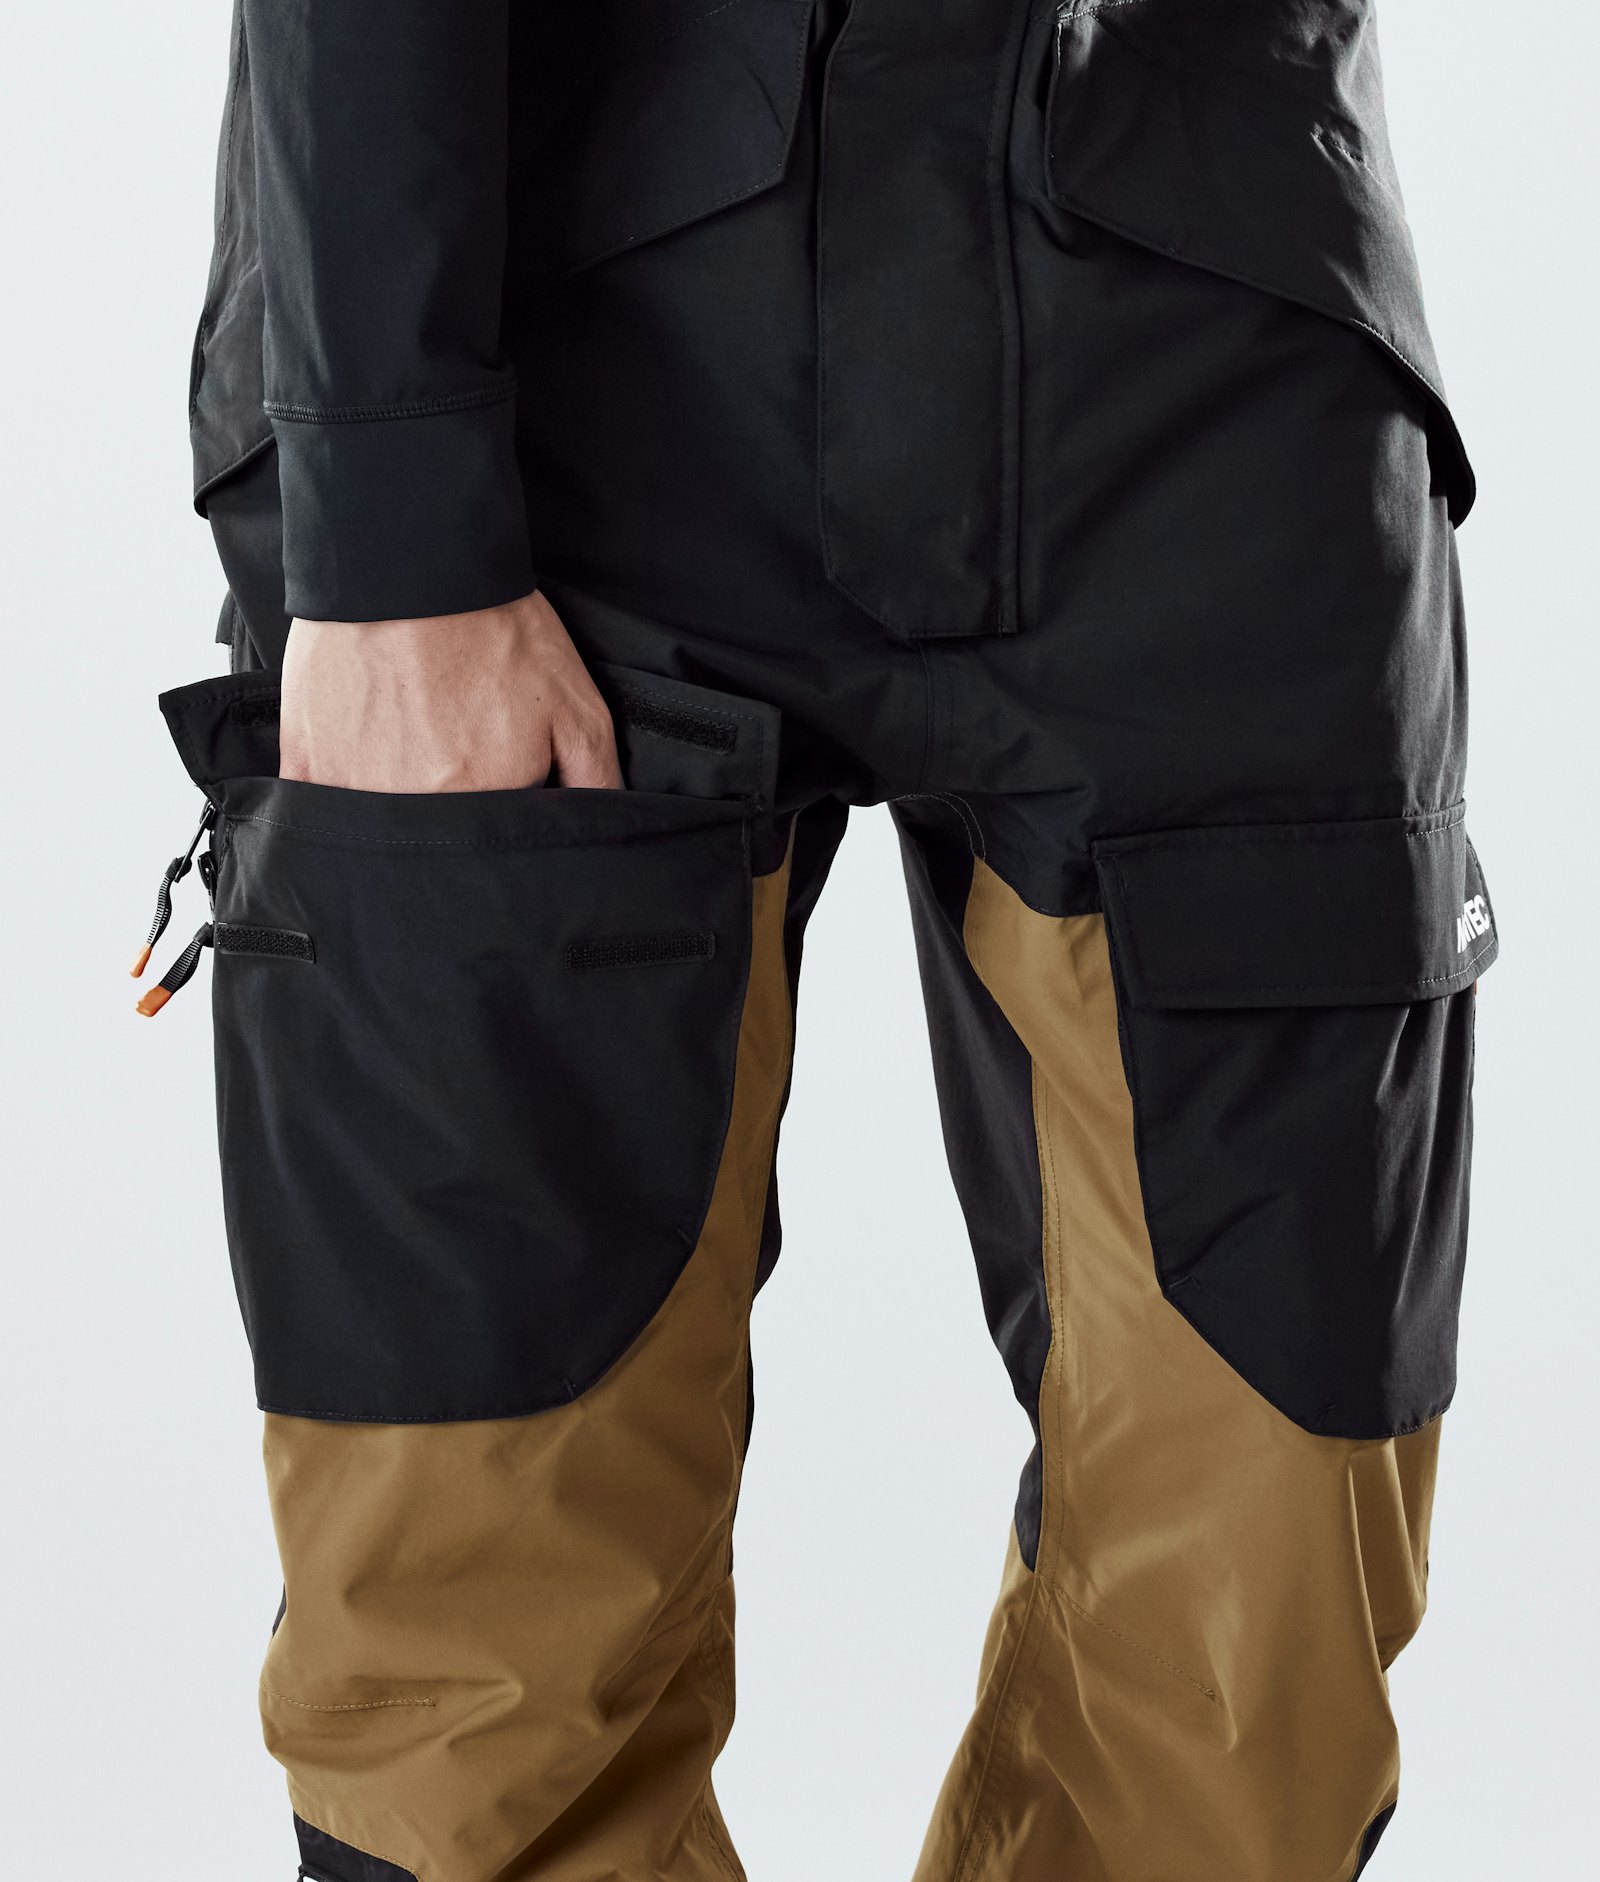 Fawk 2020 Pantalon de Ski Homme Black/Gold